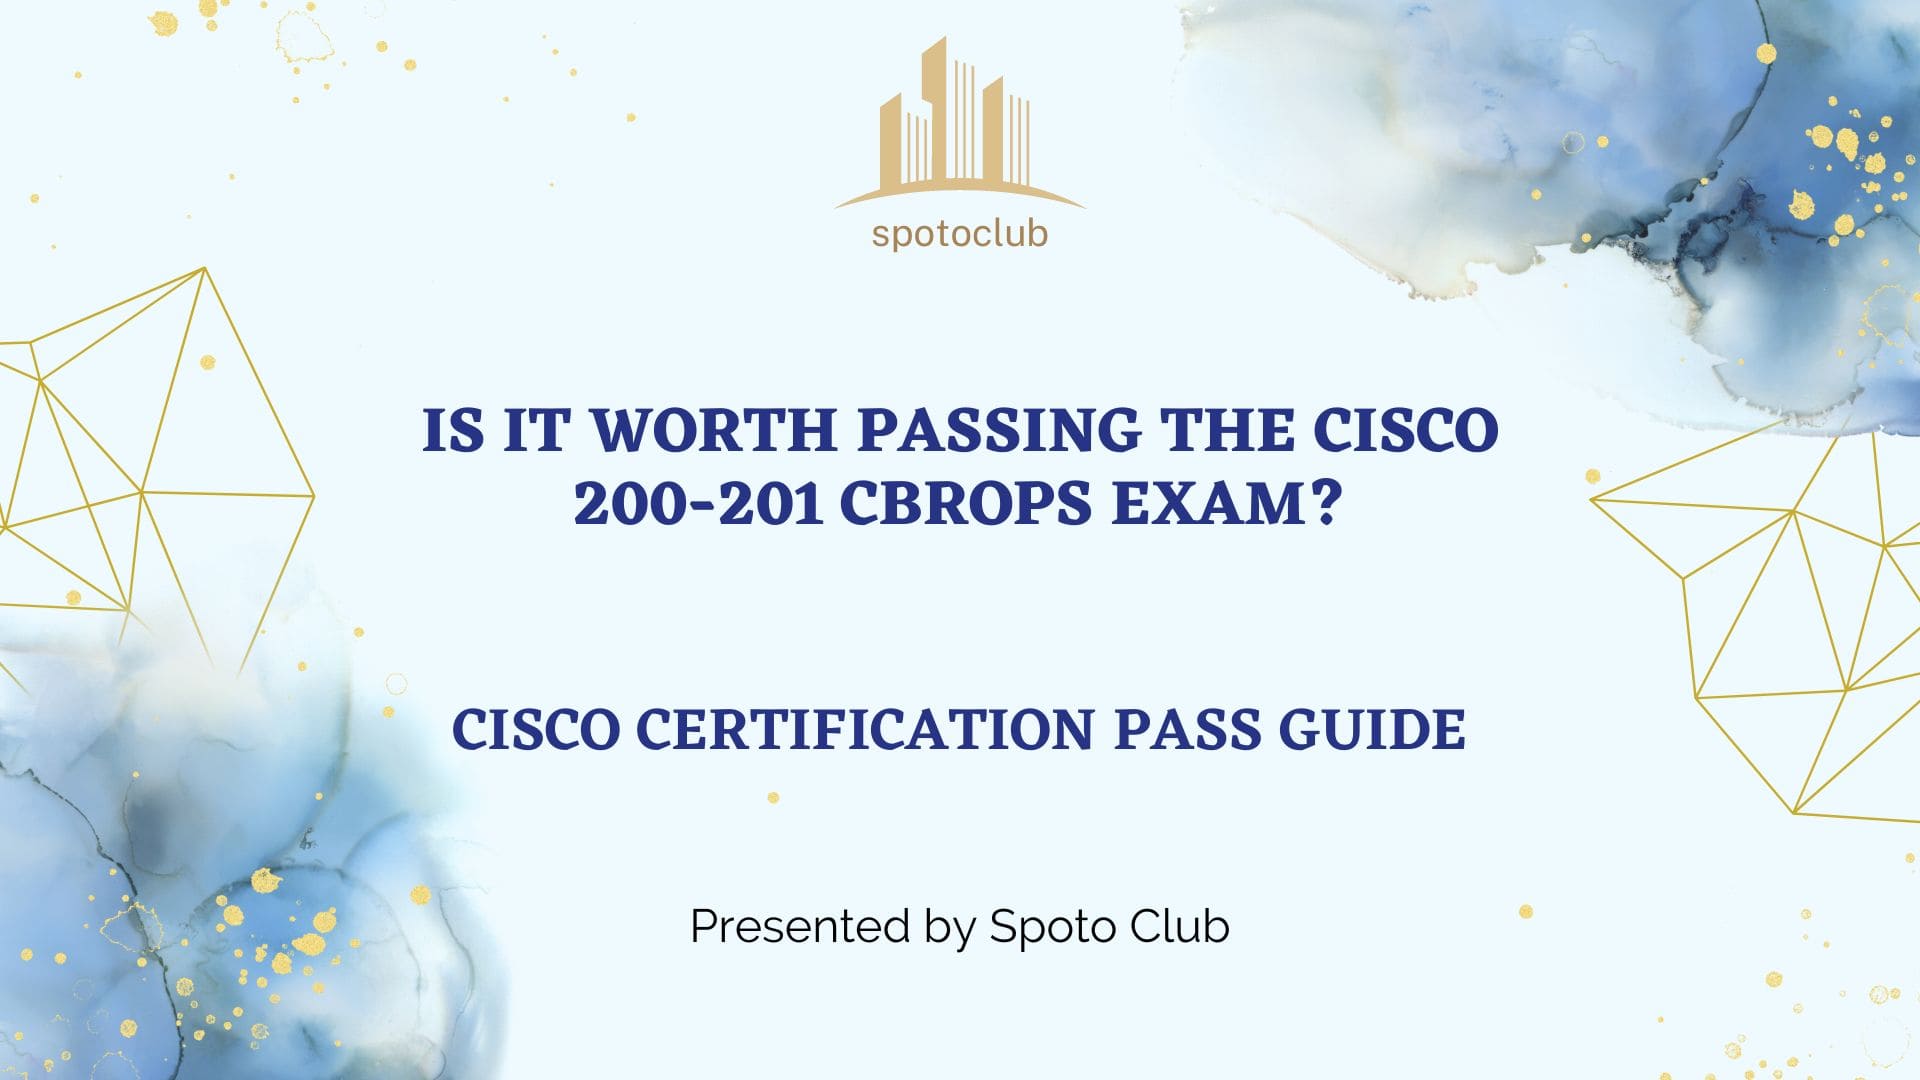 worth passing the Cisco 200-201